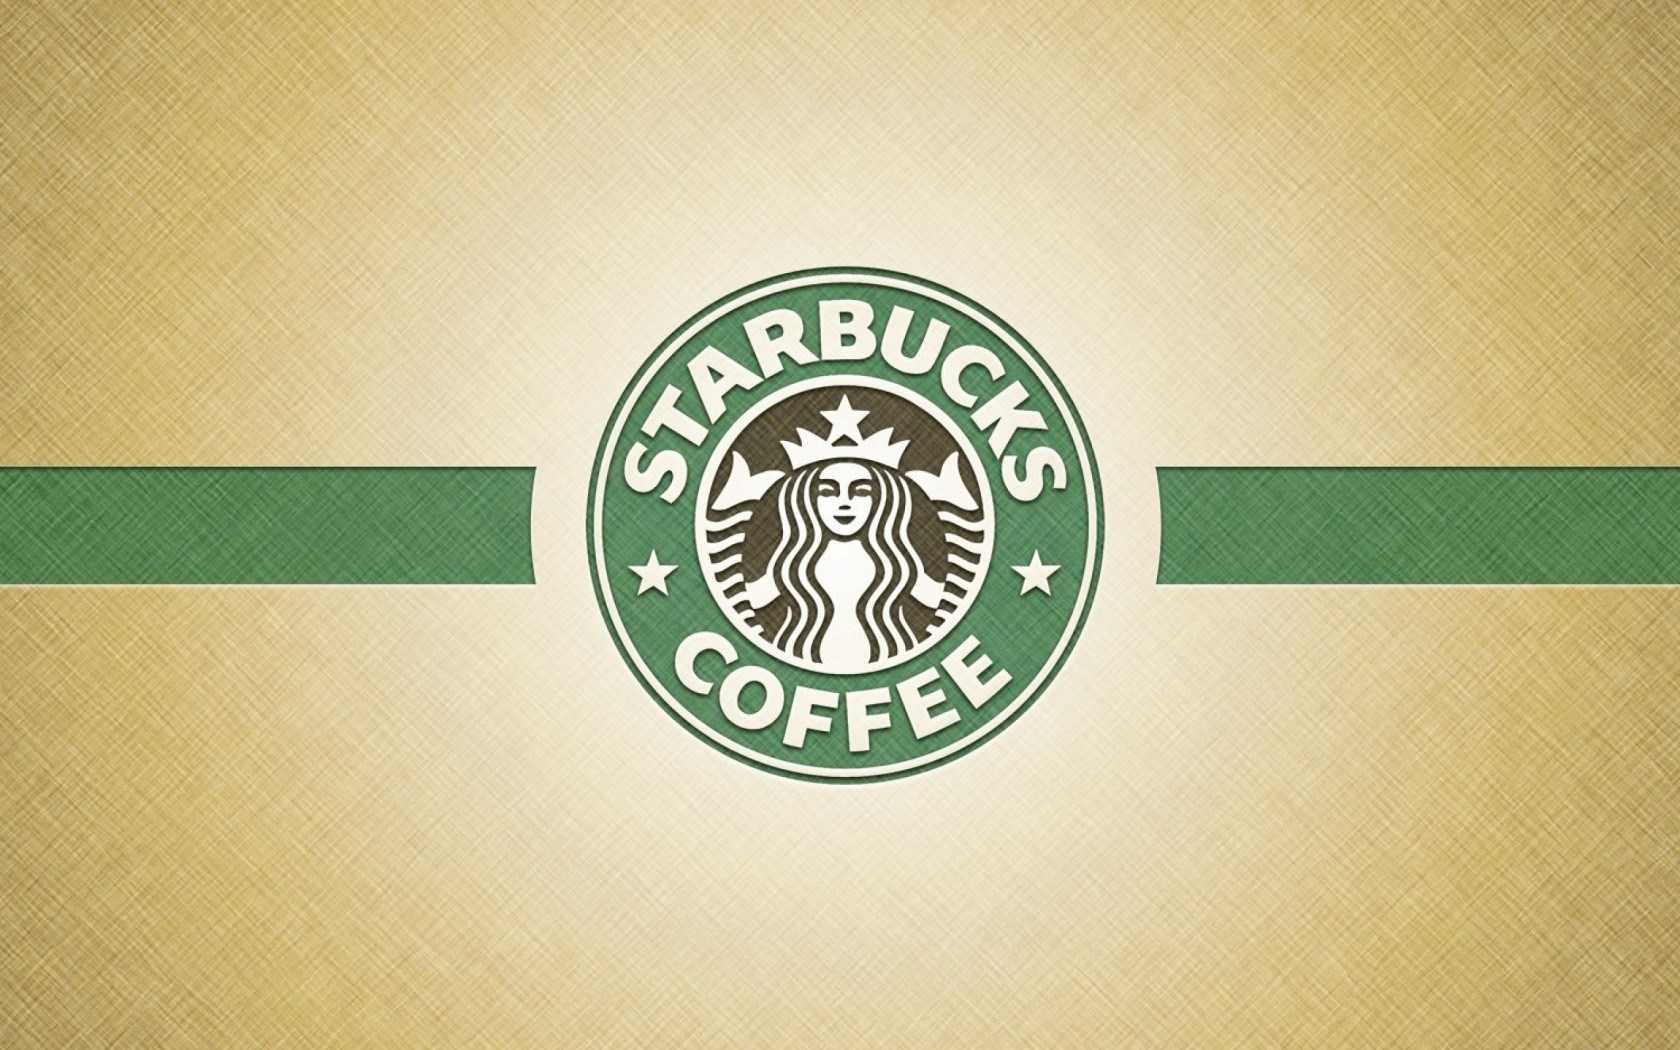 Starbucks Ppt Background - Powerpoint Backgrounds For Free For Starbucks Powerpoint Template